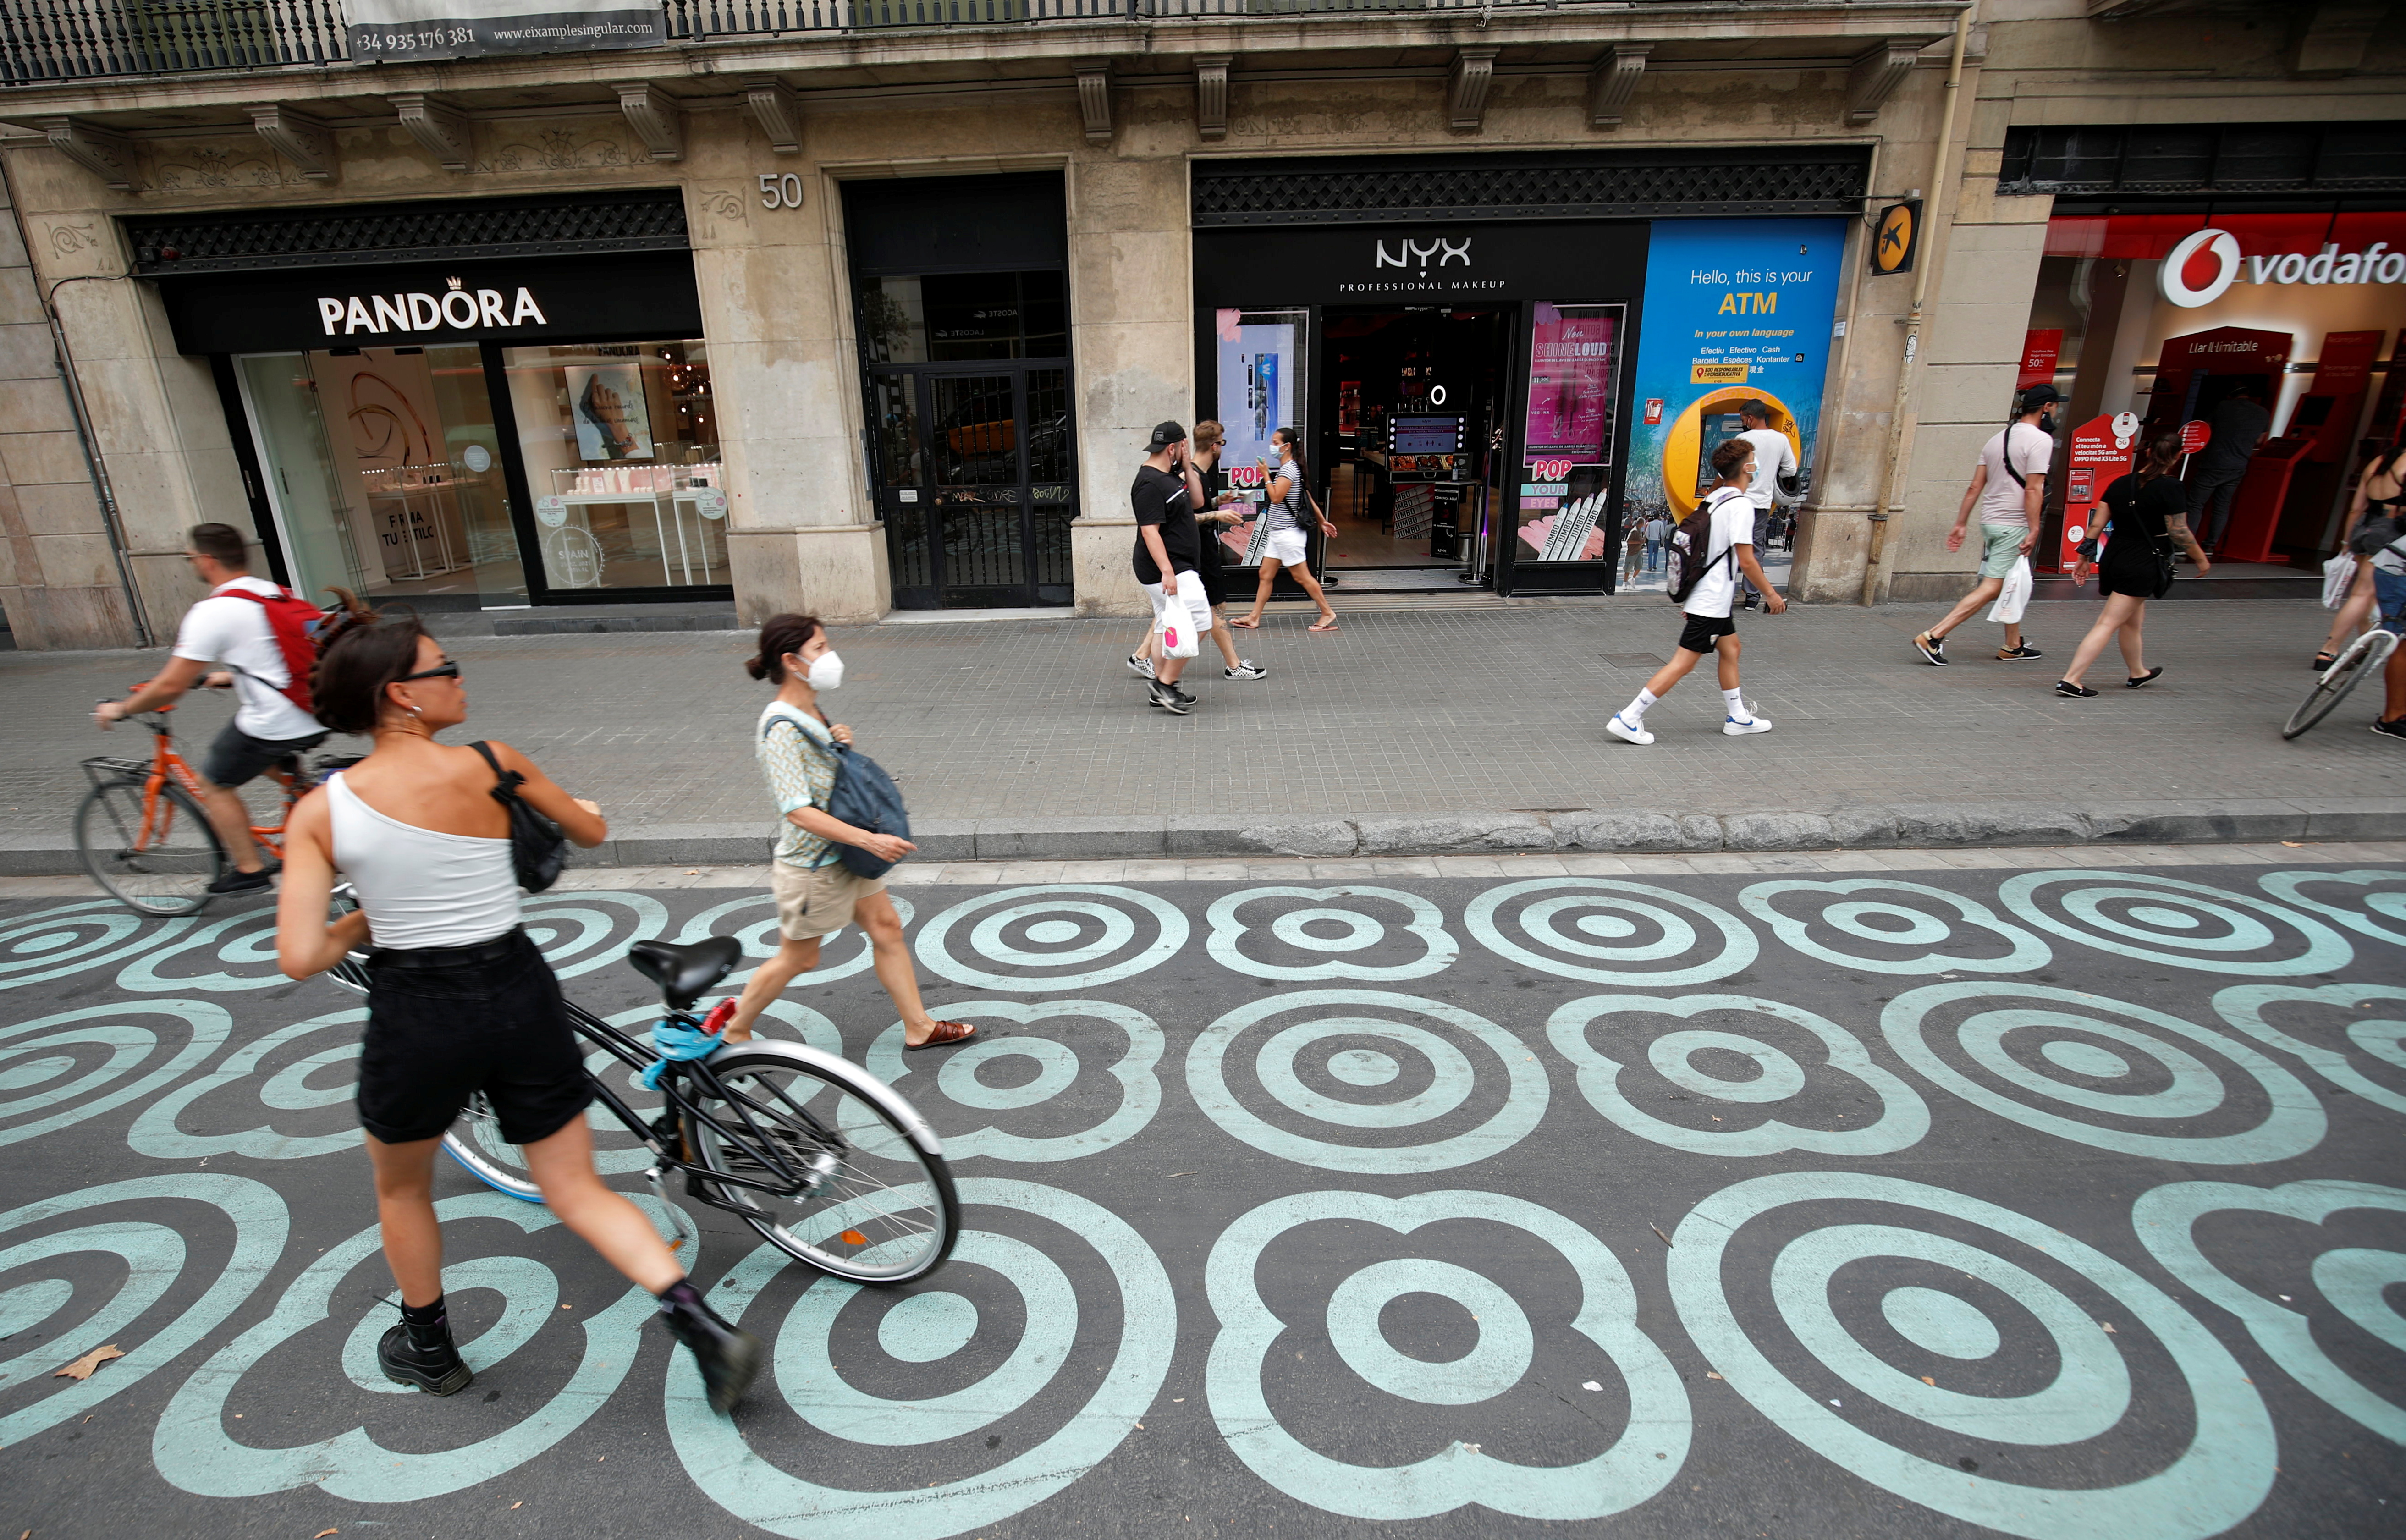 People walk by a pedestrian zone painted in blue at Pelai street in Barcelona, Spain, July 26, 2021. REUTERS/Albert Gea